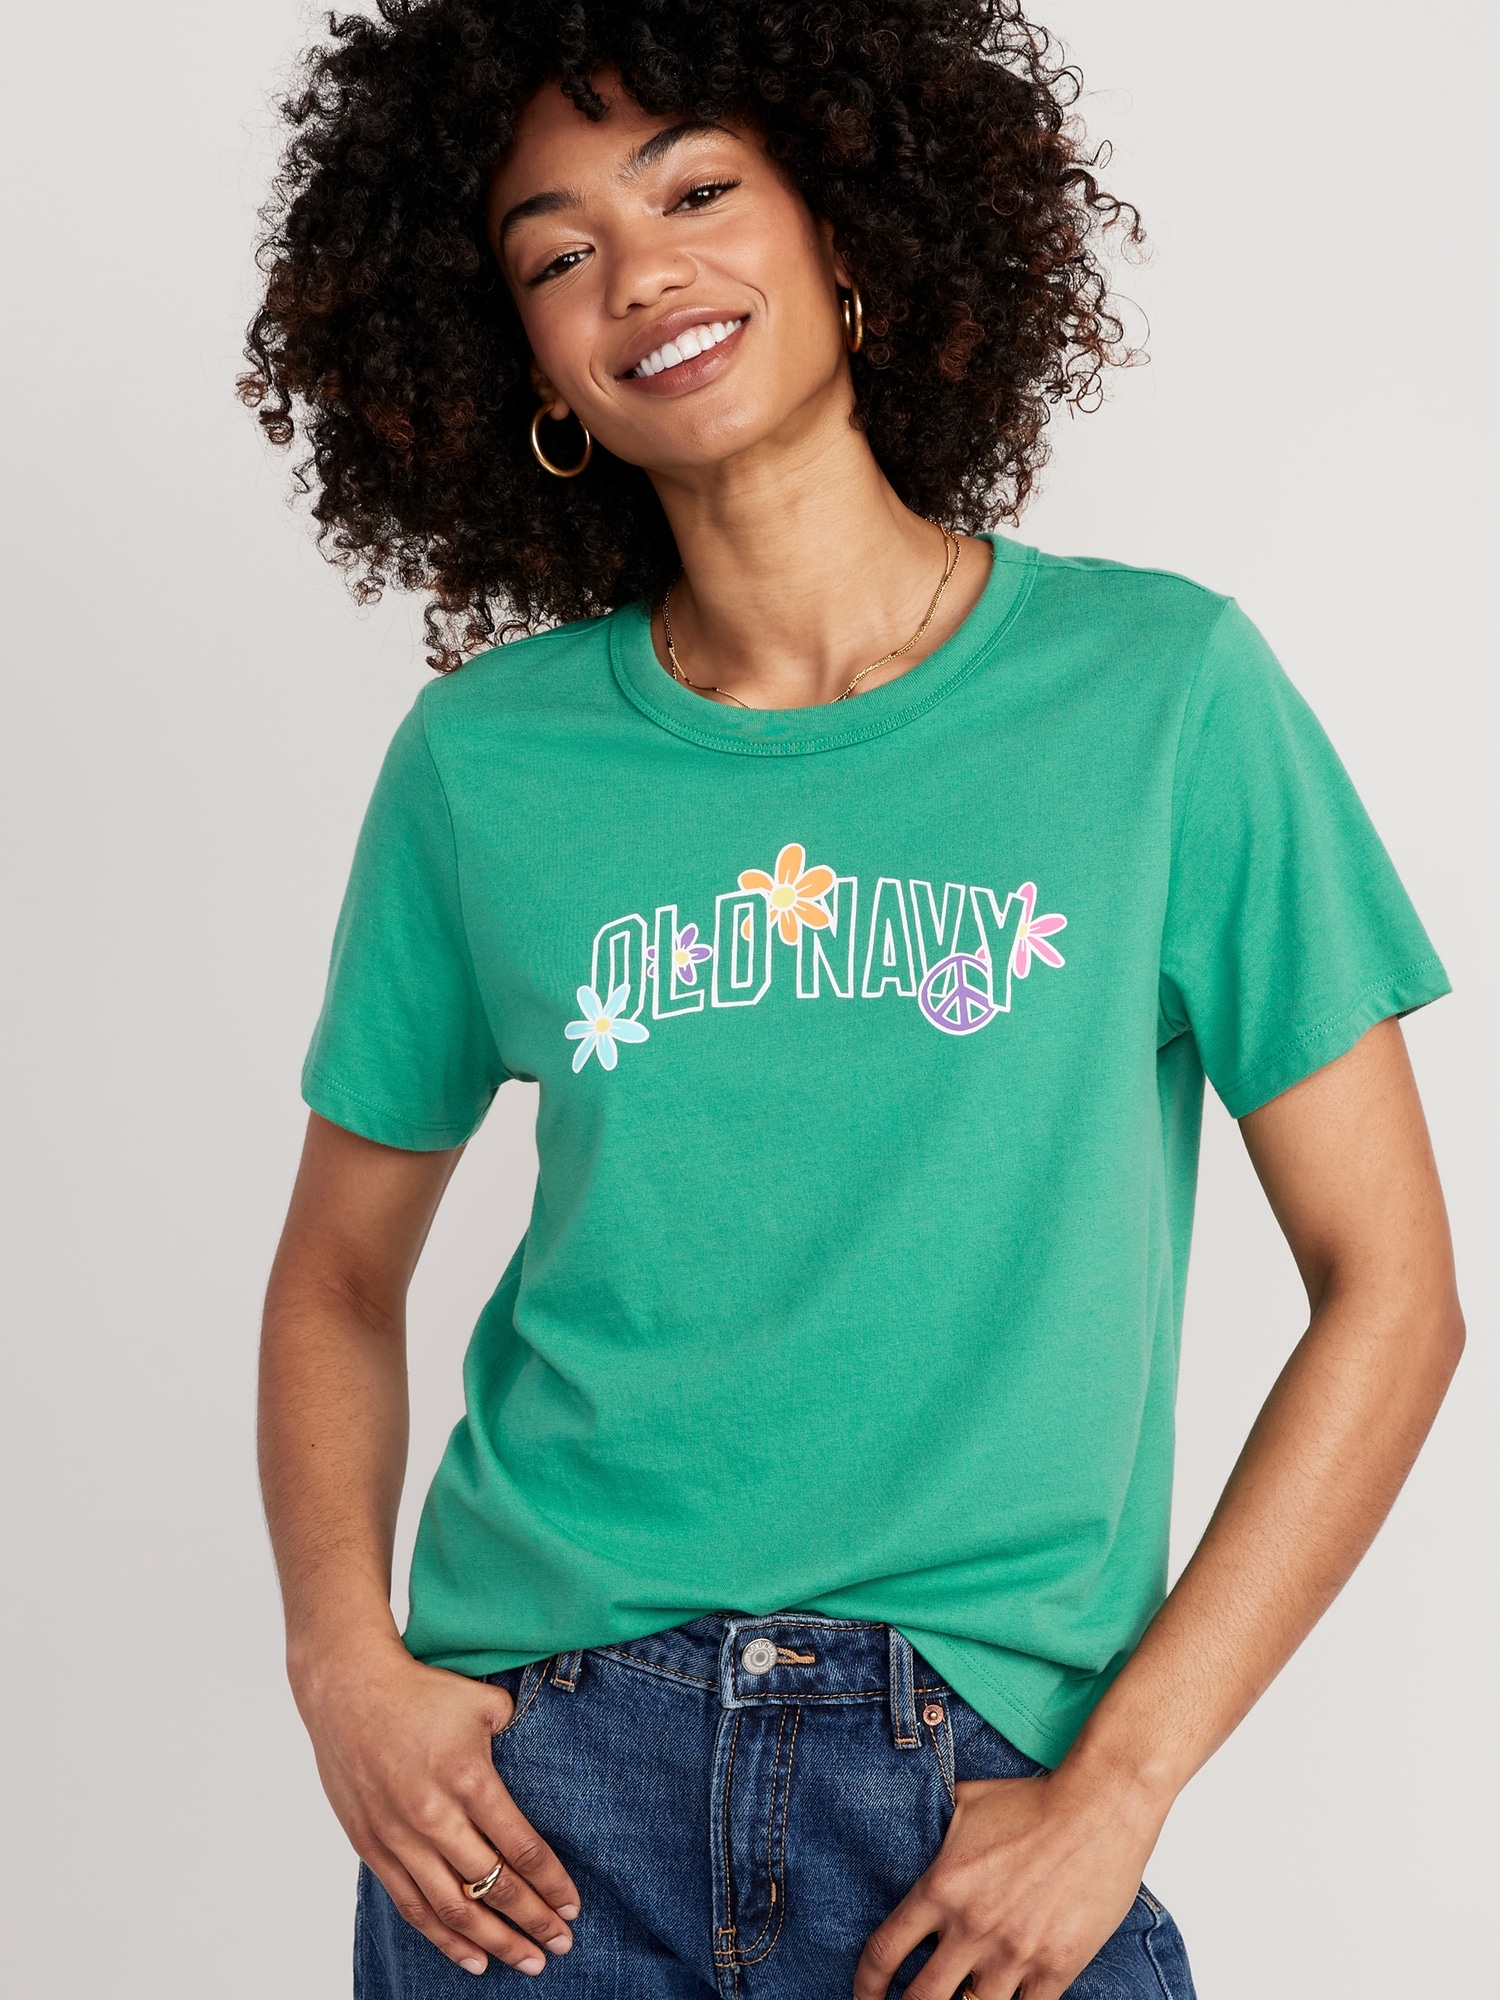 EveryWear Graphic T-Shirt for Women